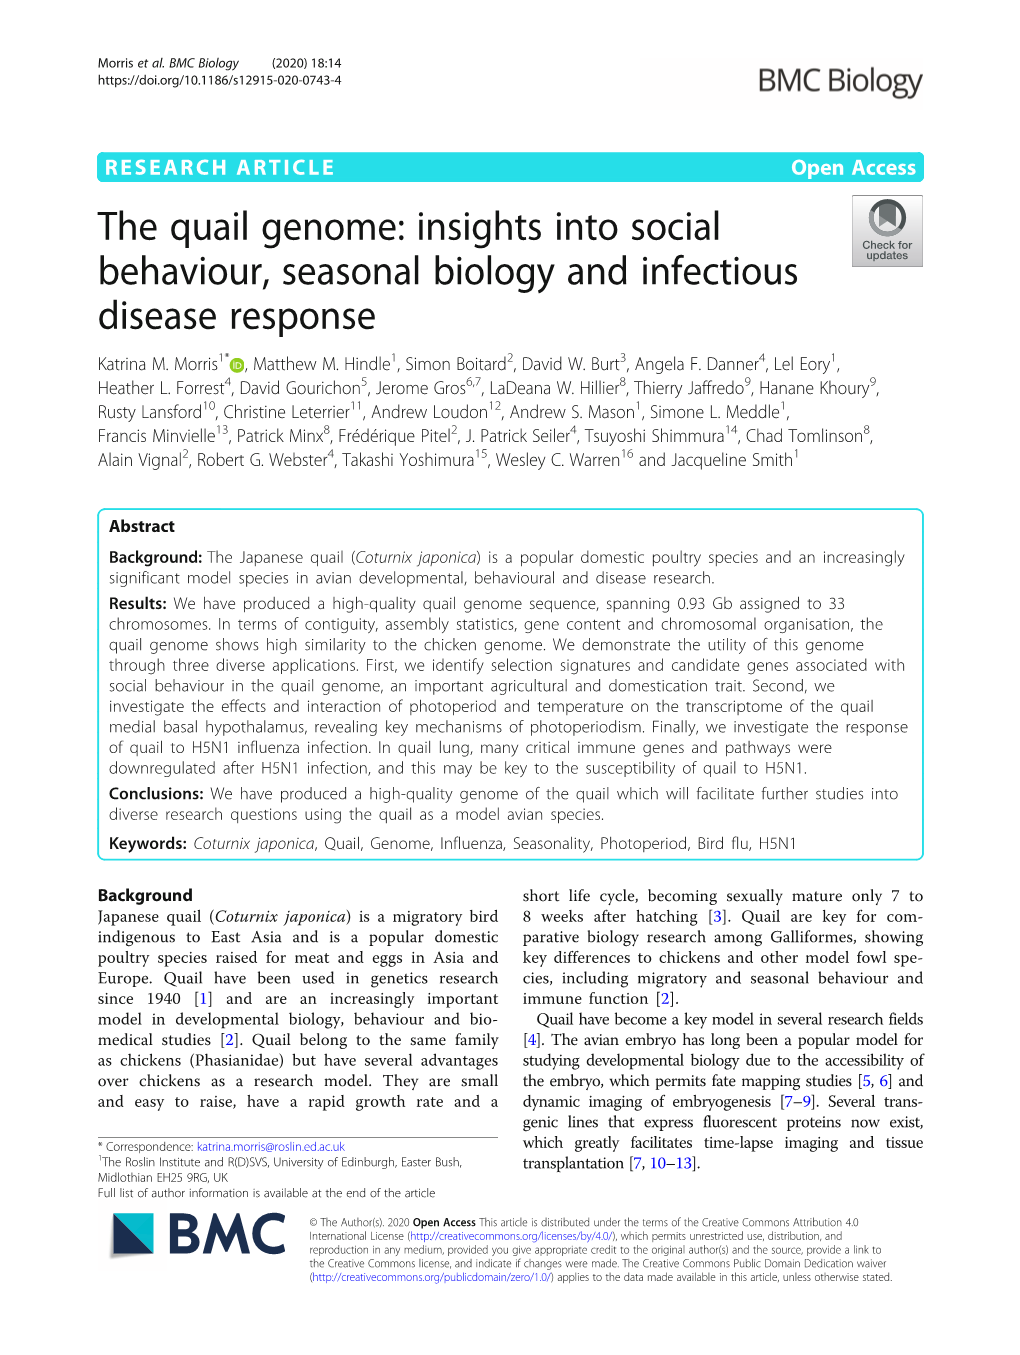 The Quail Genome: Insights Into Social Behaviour, Seasonal Biology and Infectious Disease Response Katrina M